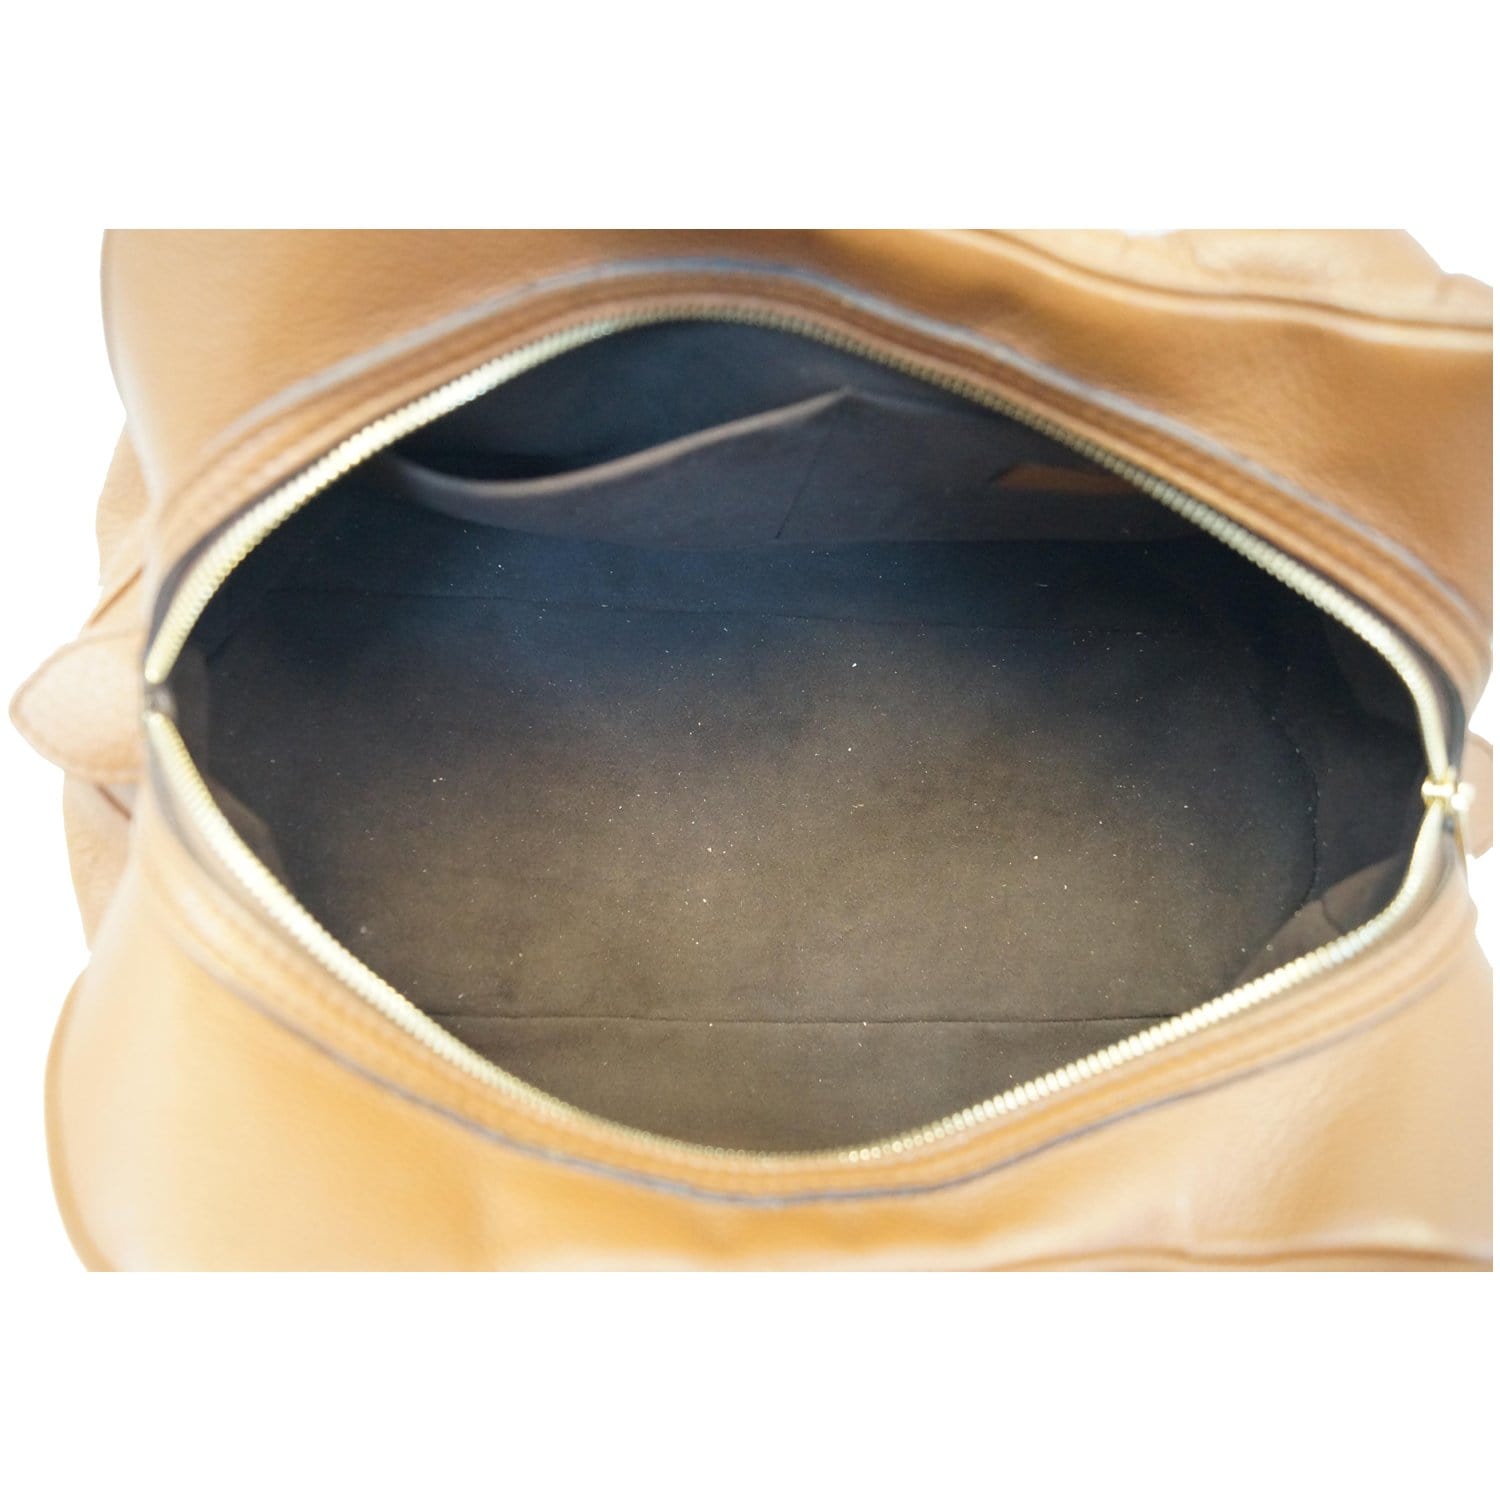 Lunar GM Tote Bag in Mahina Leather, Gold Hardware